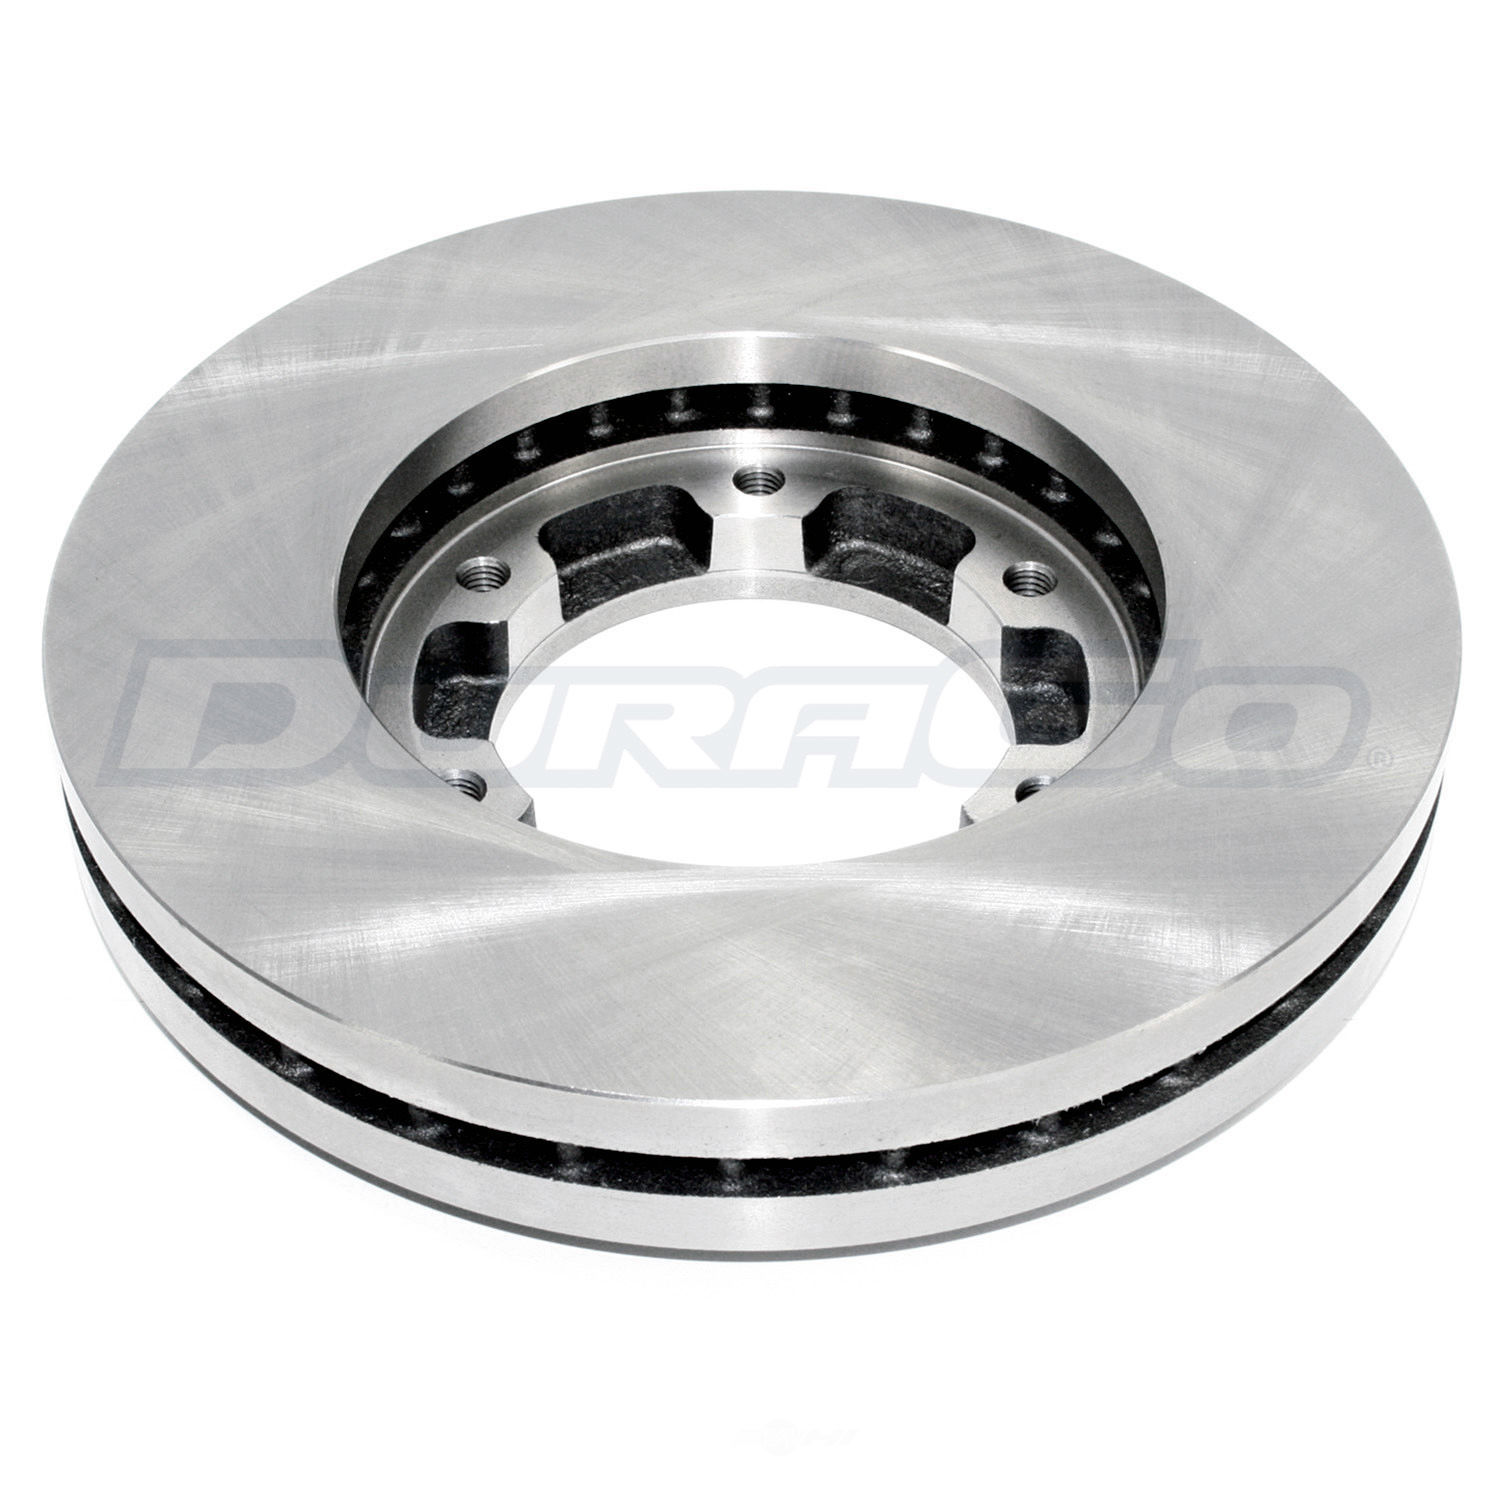 DURAGO - Disc Brake Rotor - D48 BR901556